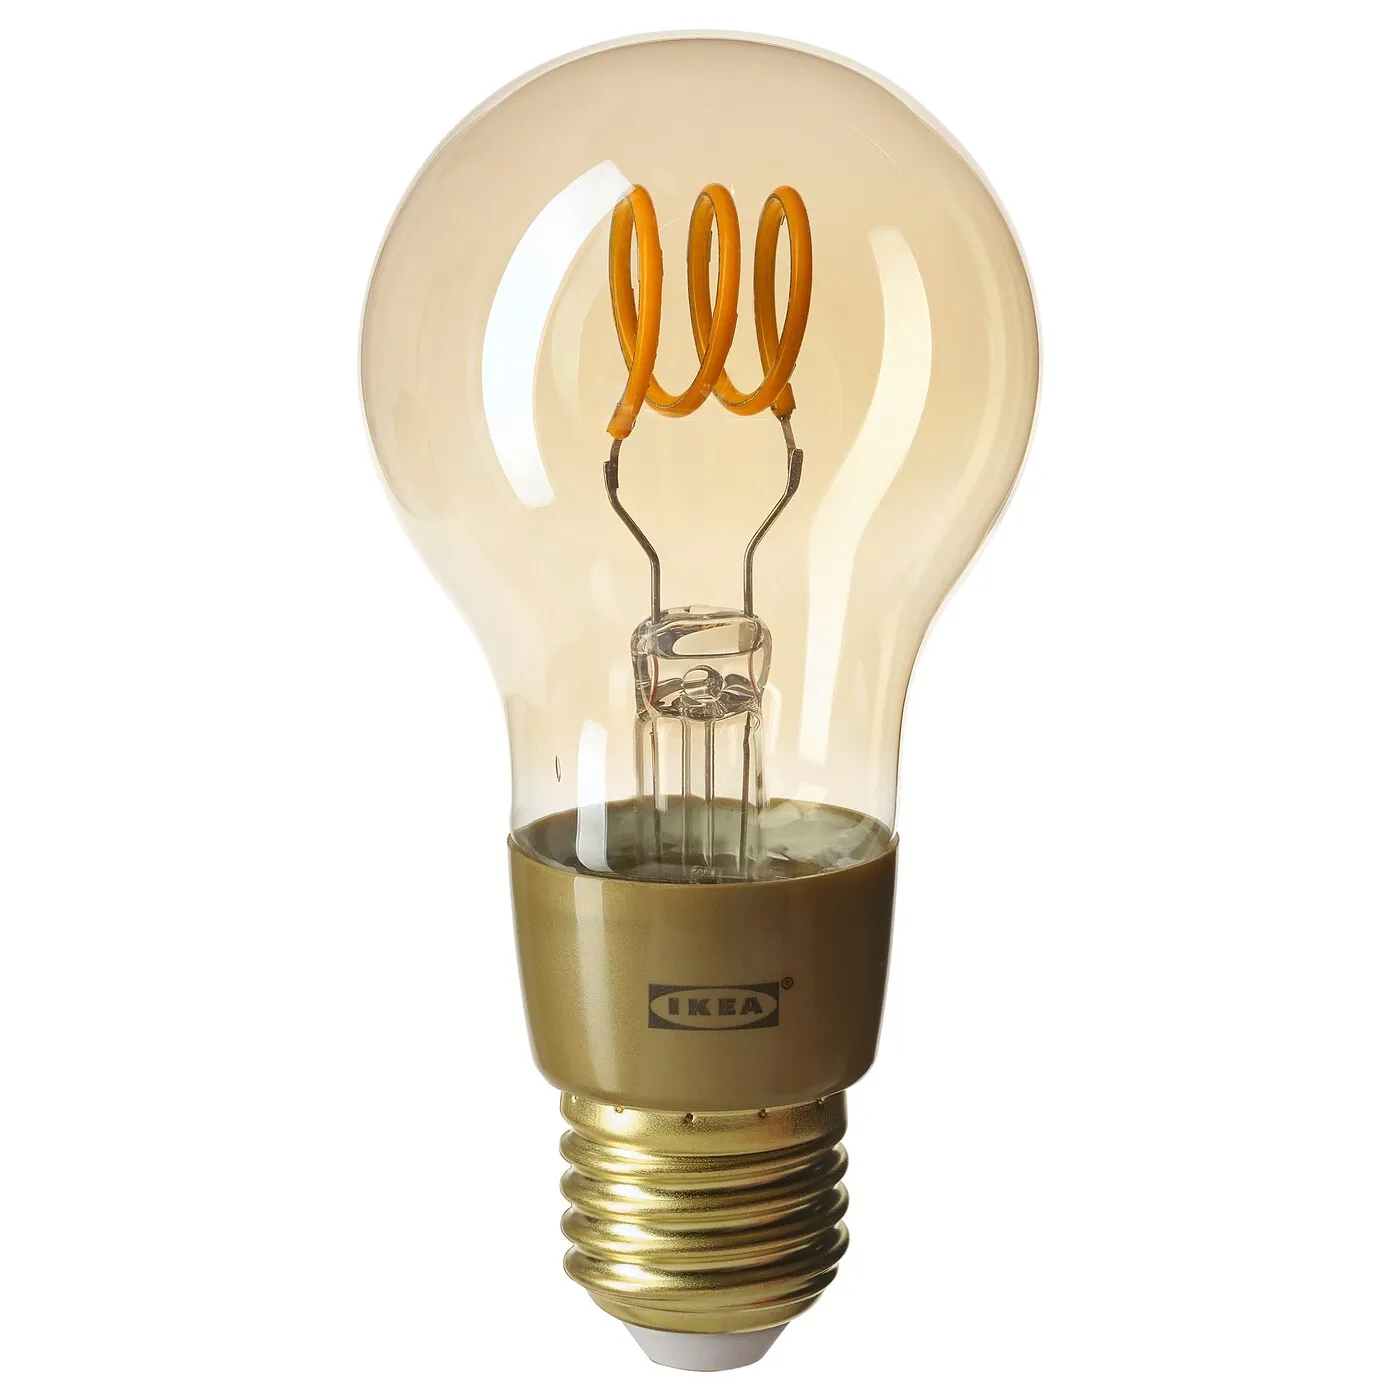 Tradfri LED bulb E27 250 lumen, wireless dimmable warm glow, globe brown clear glass